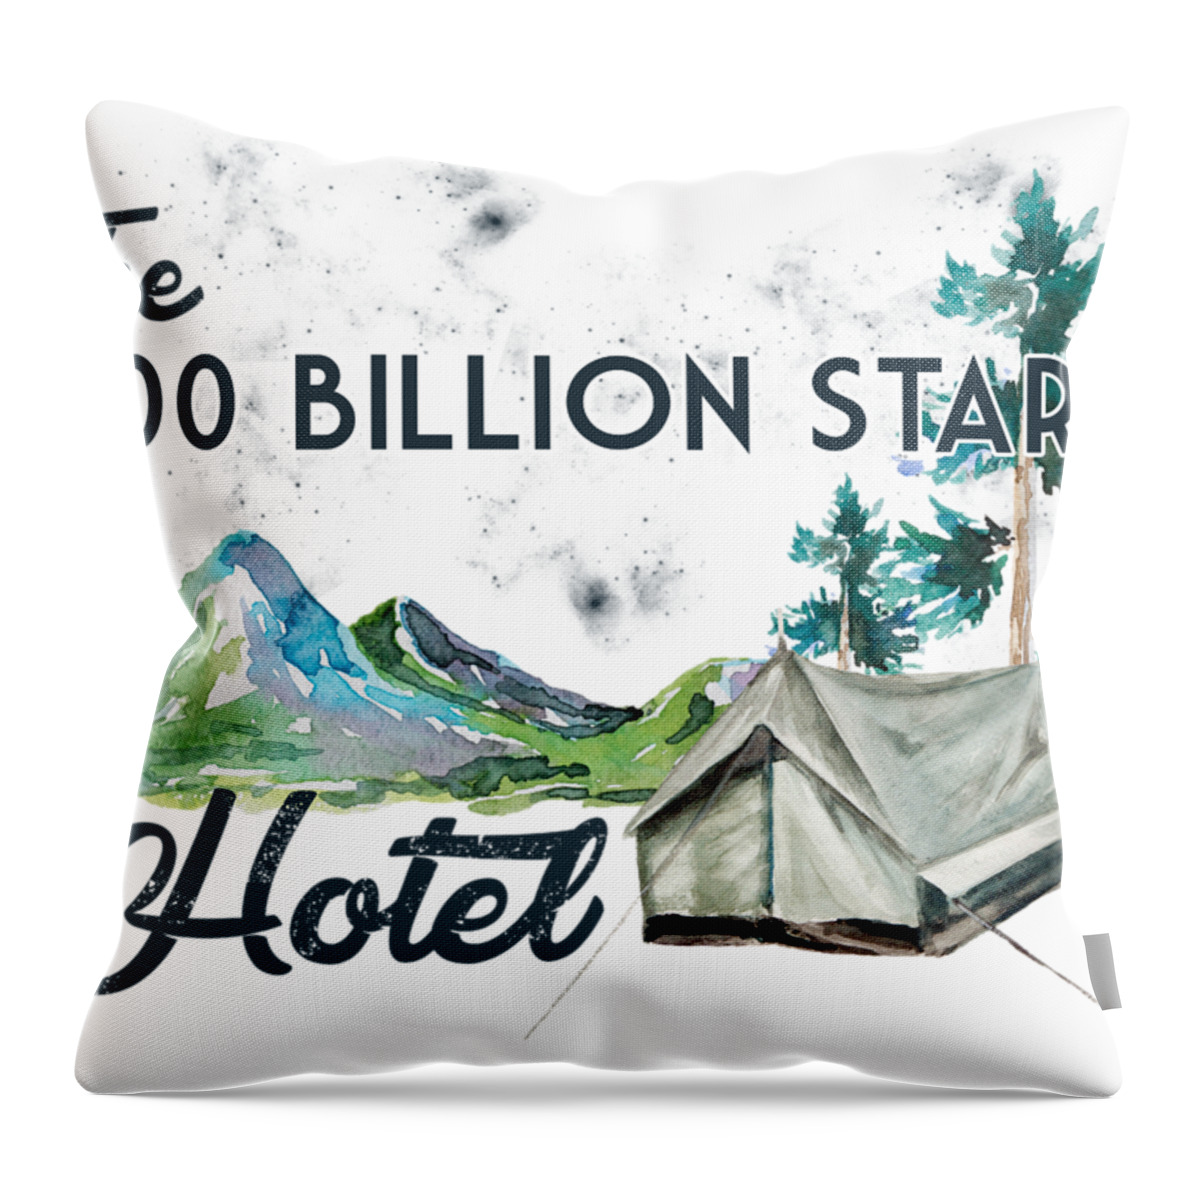 Tent Throw Pillow featuring the digital art 100 Billion Stars Hotel by Heather Applegate